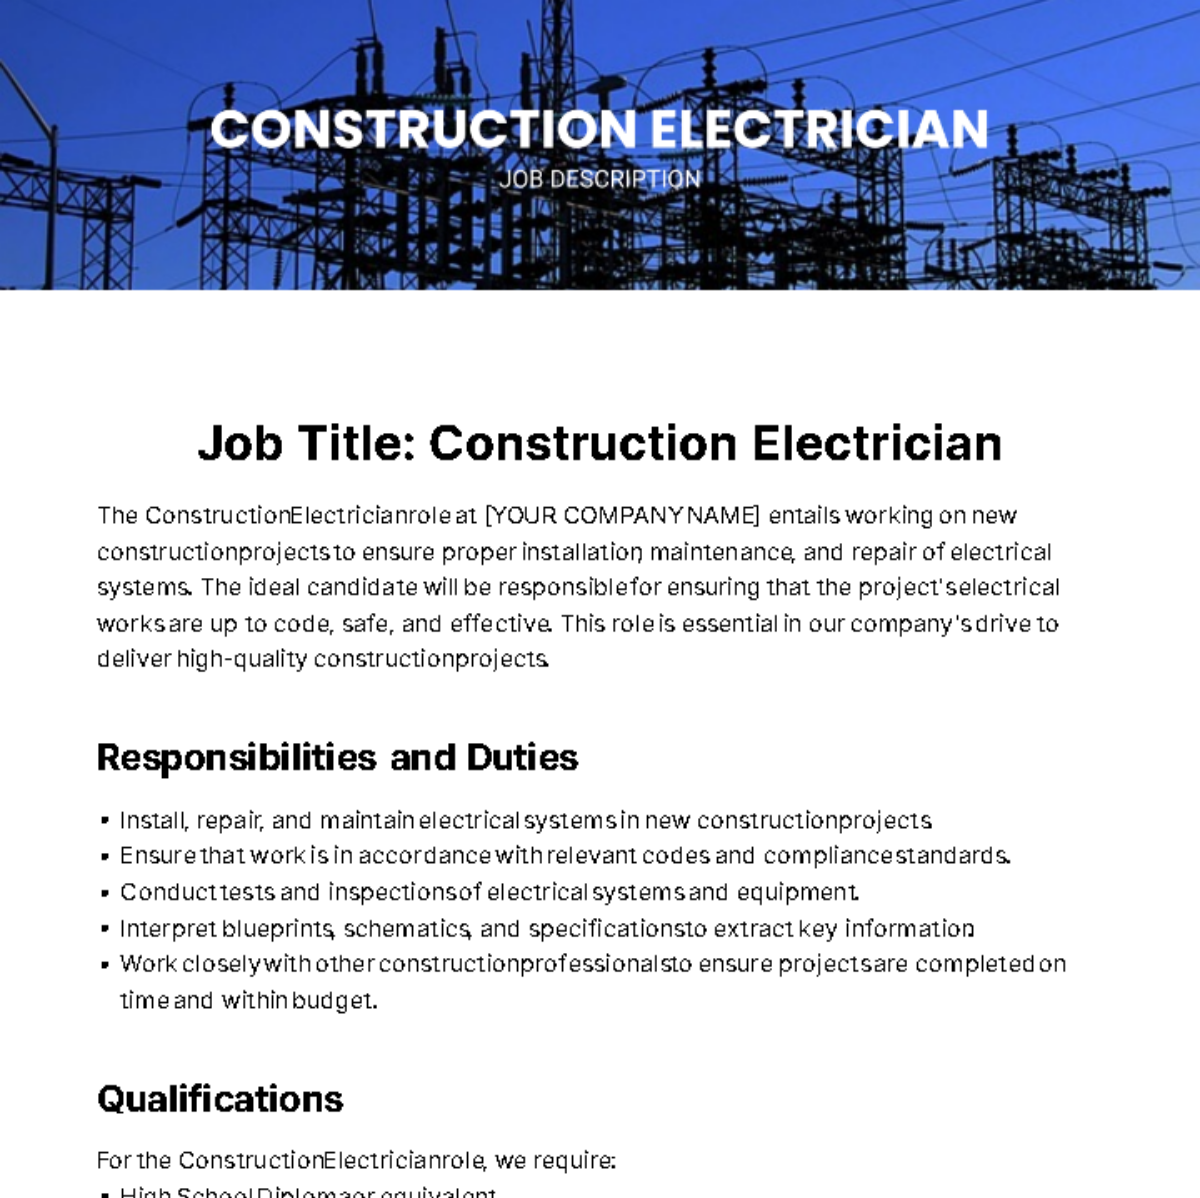 Construction Electrician Job Description Template